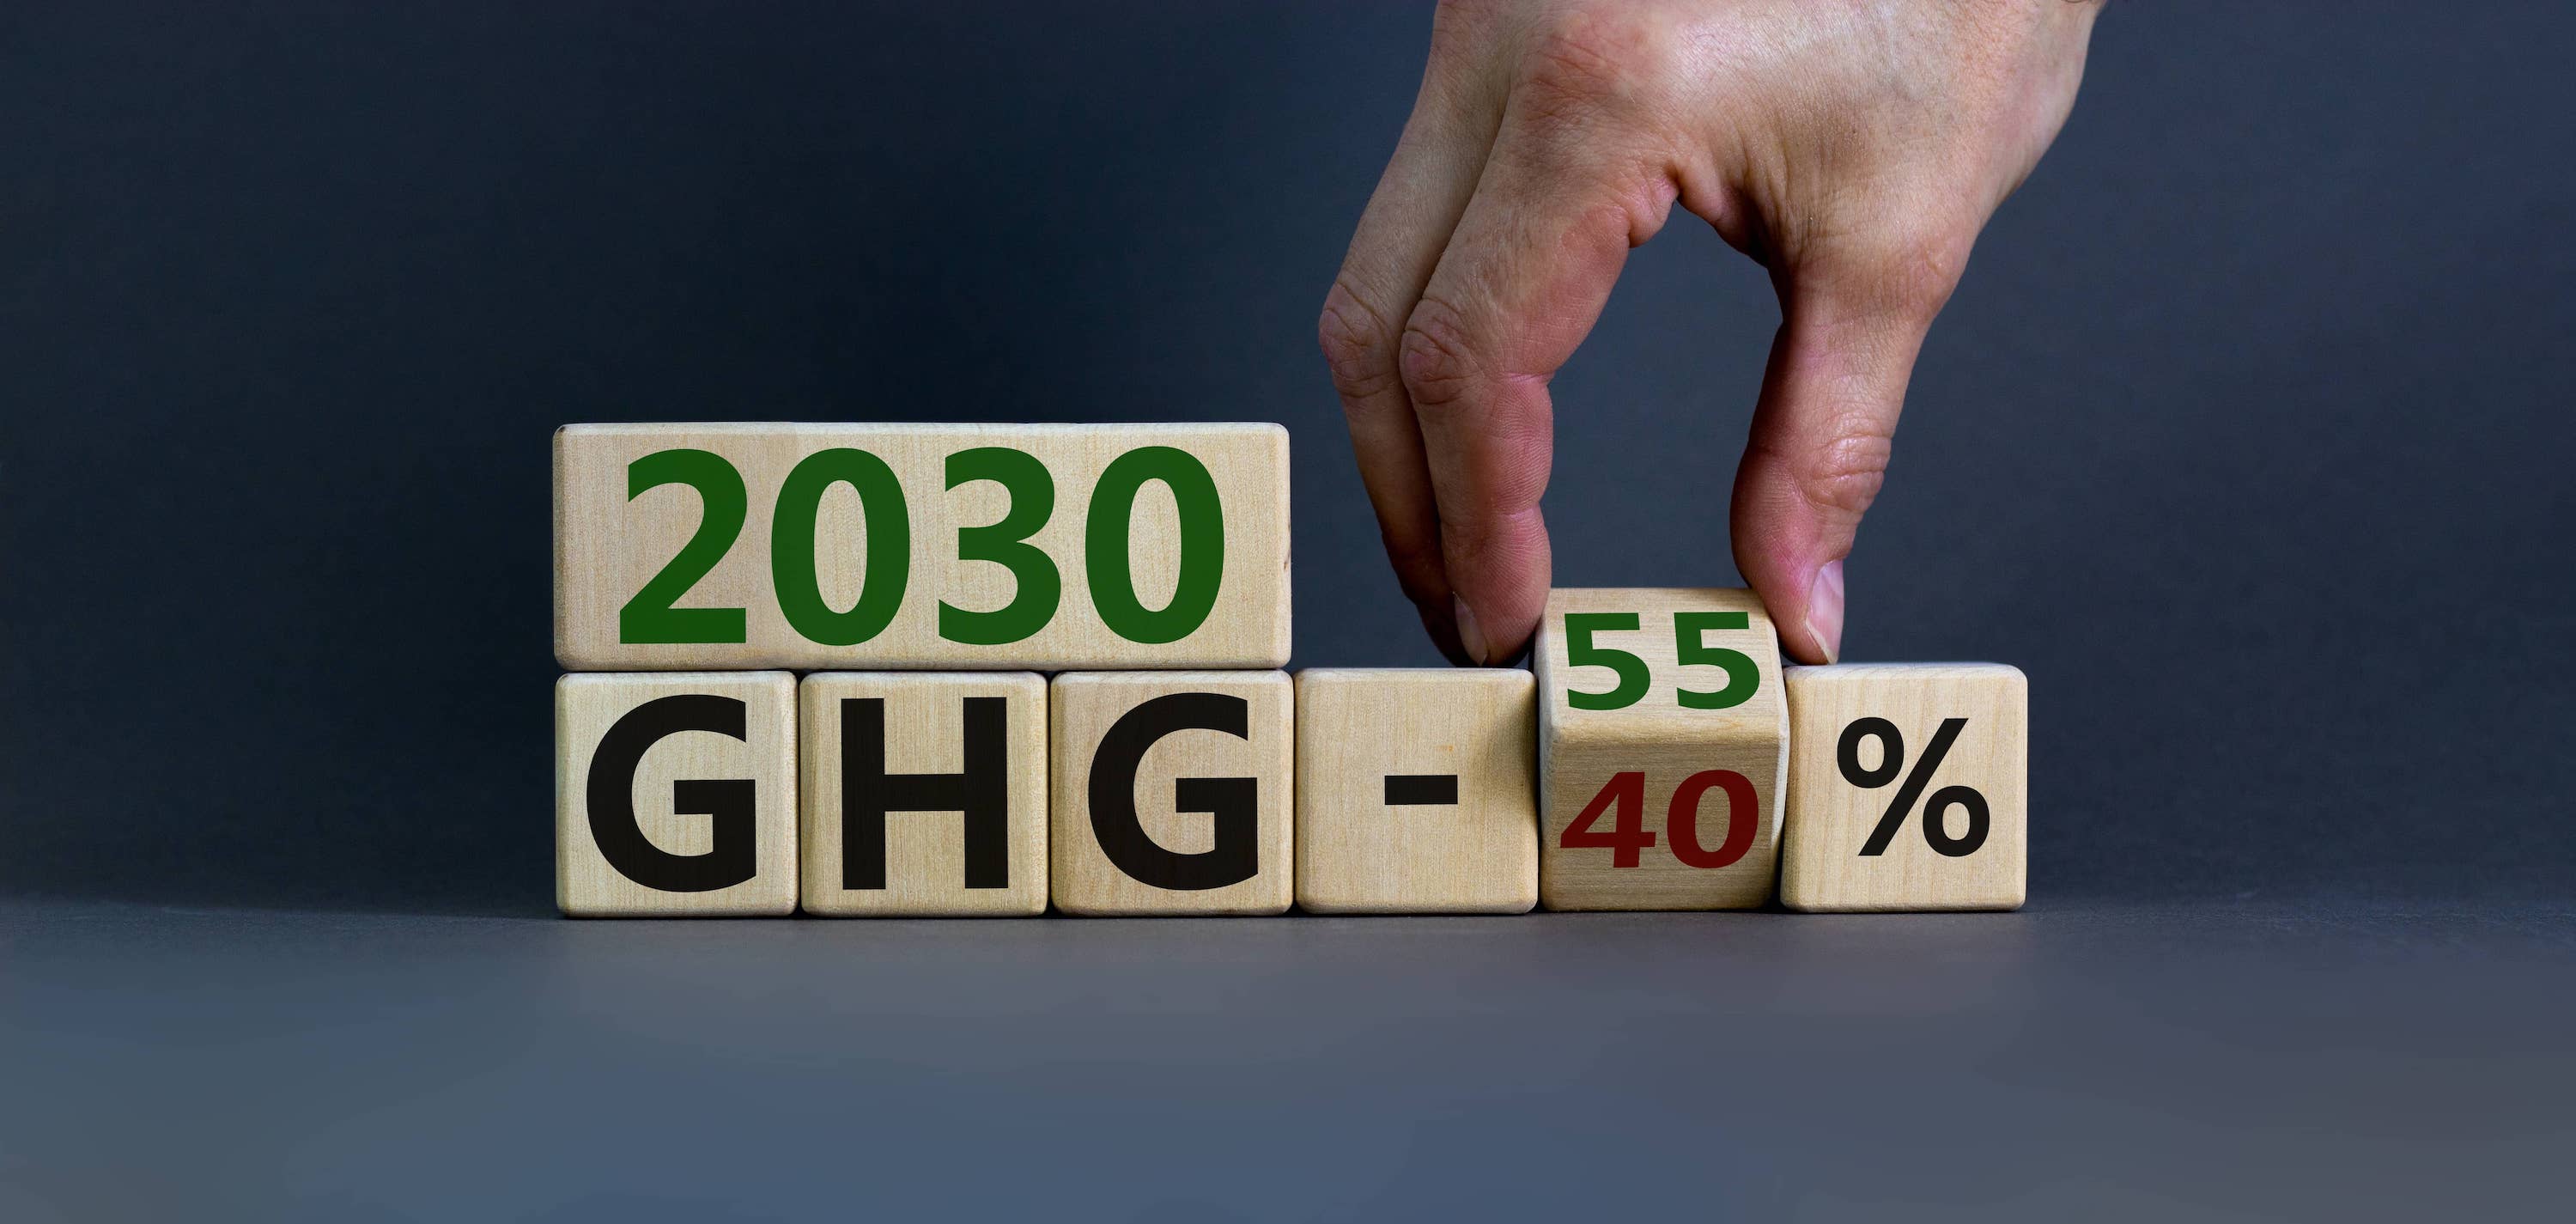 ghg reduction agenda 2030